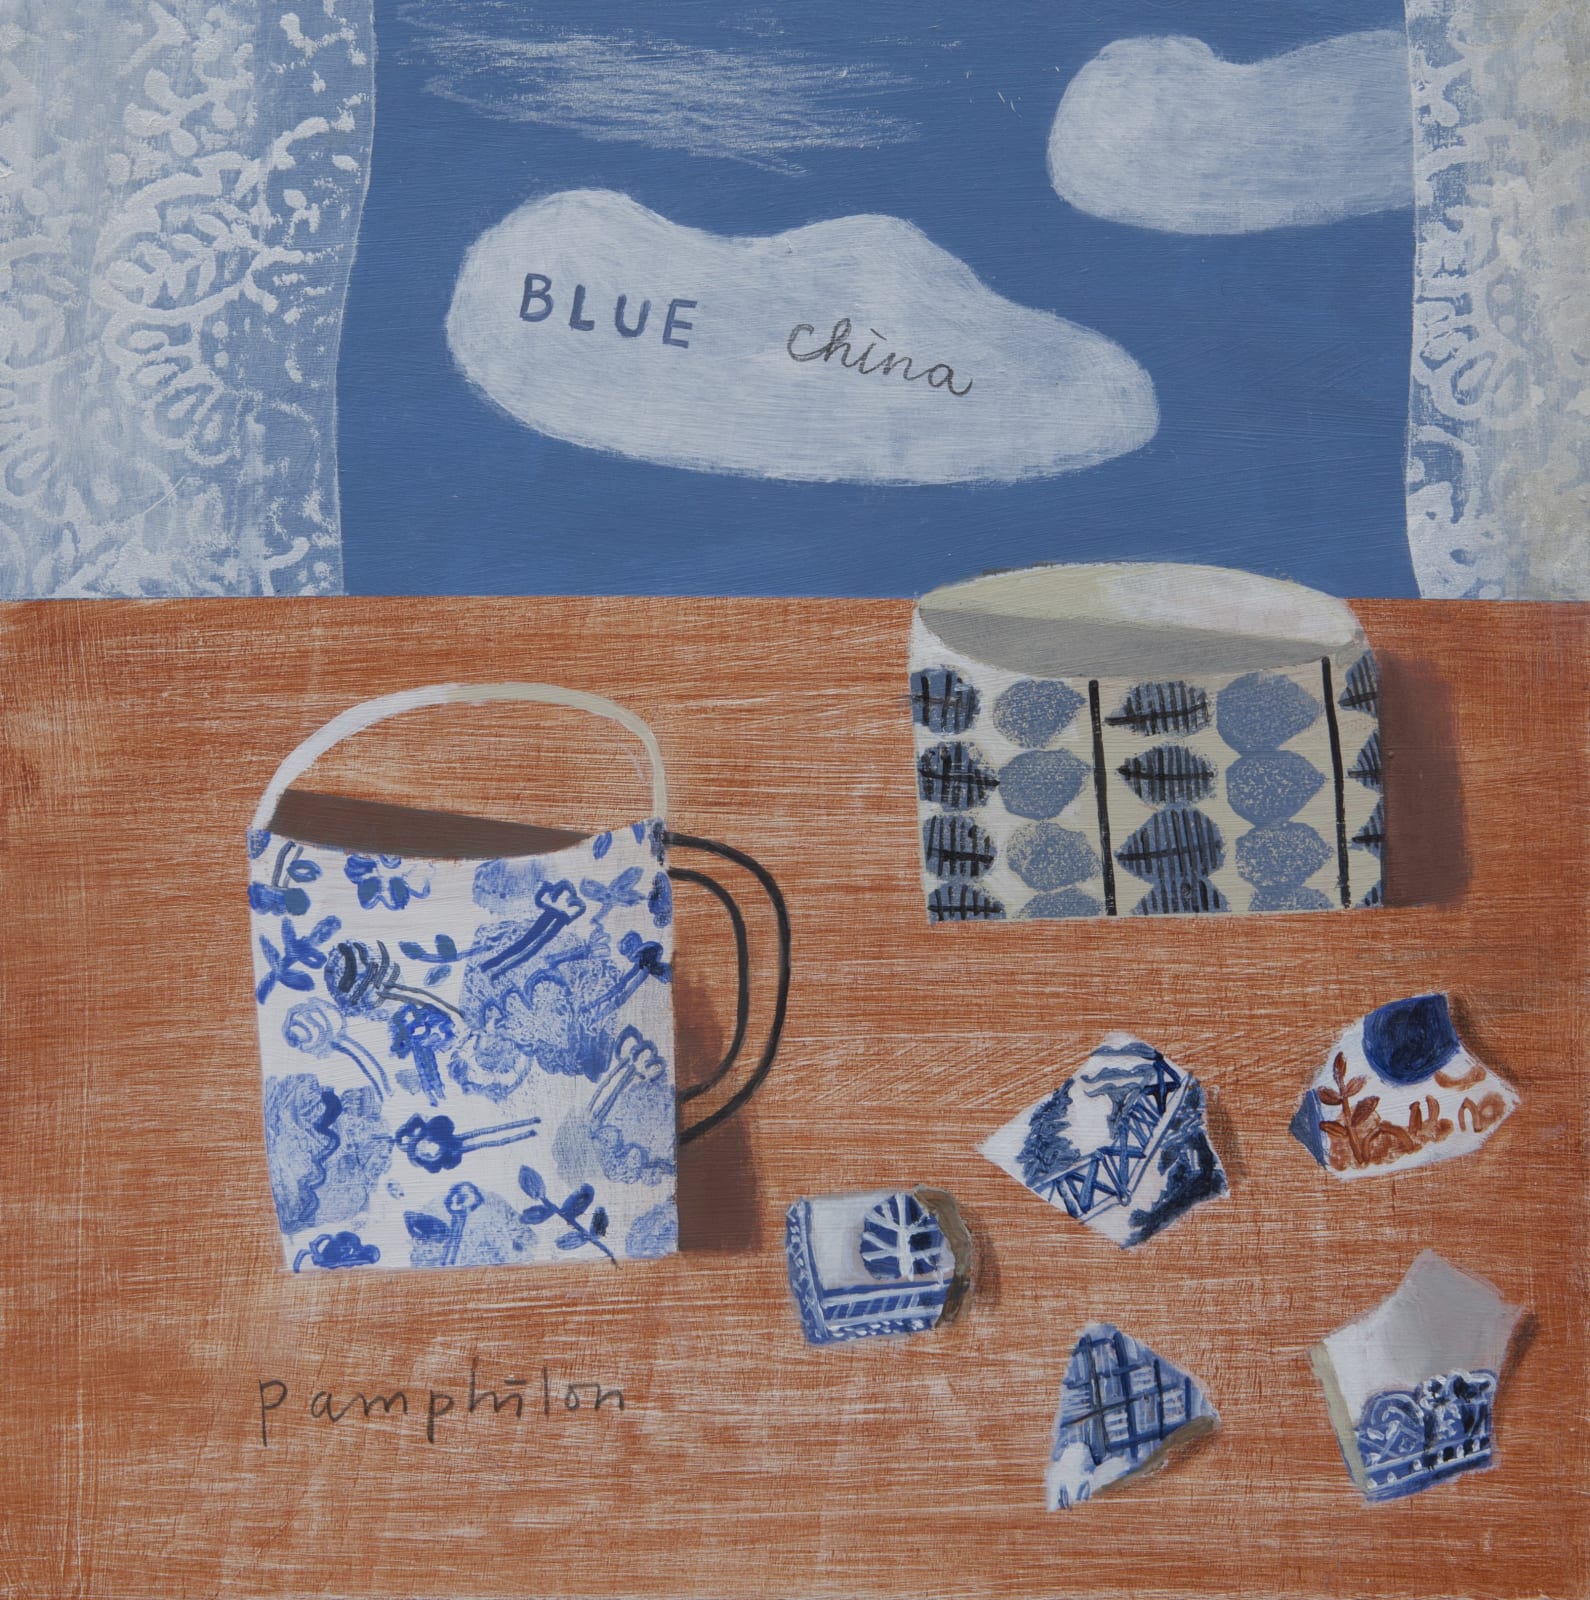 Elaine Pamphilon, Blue China